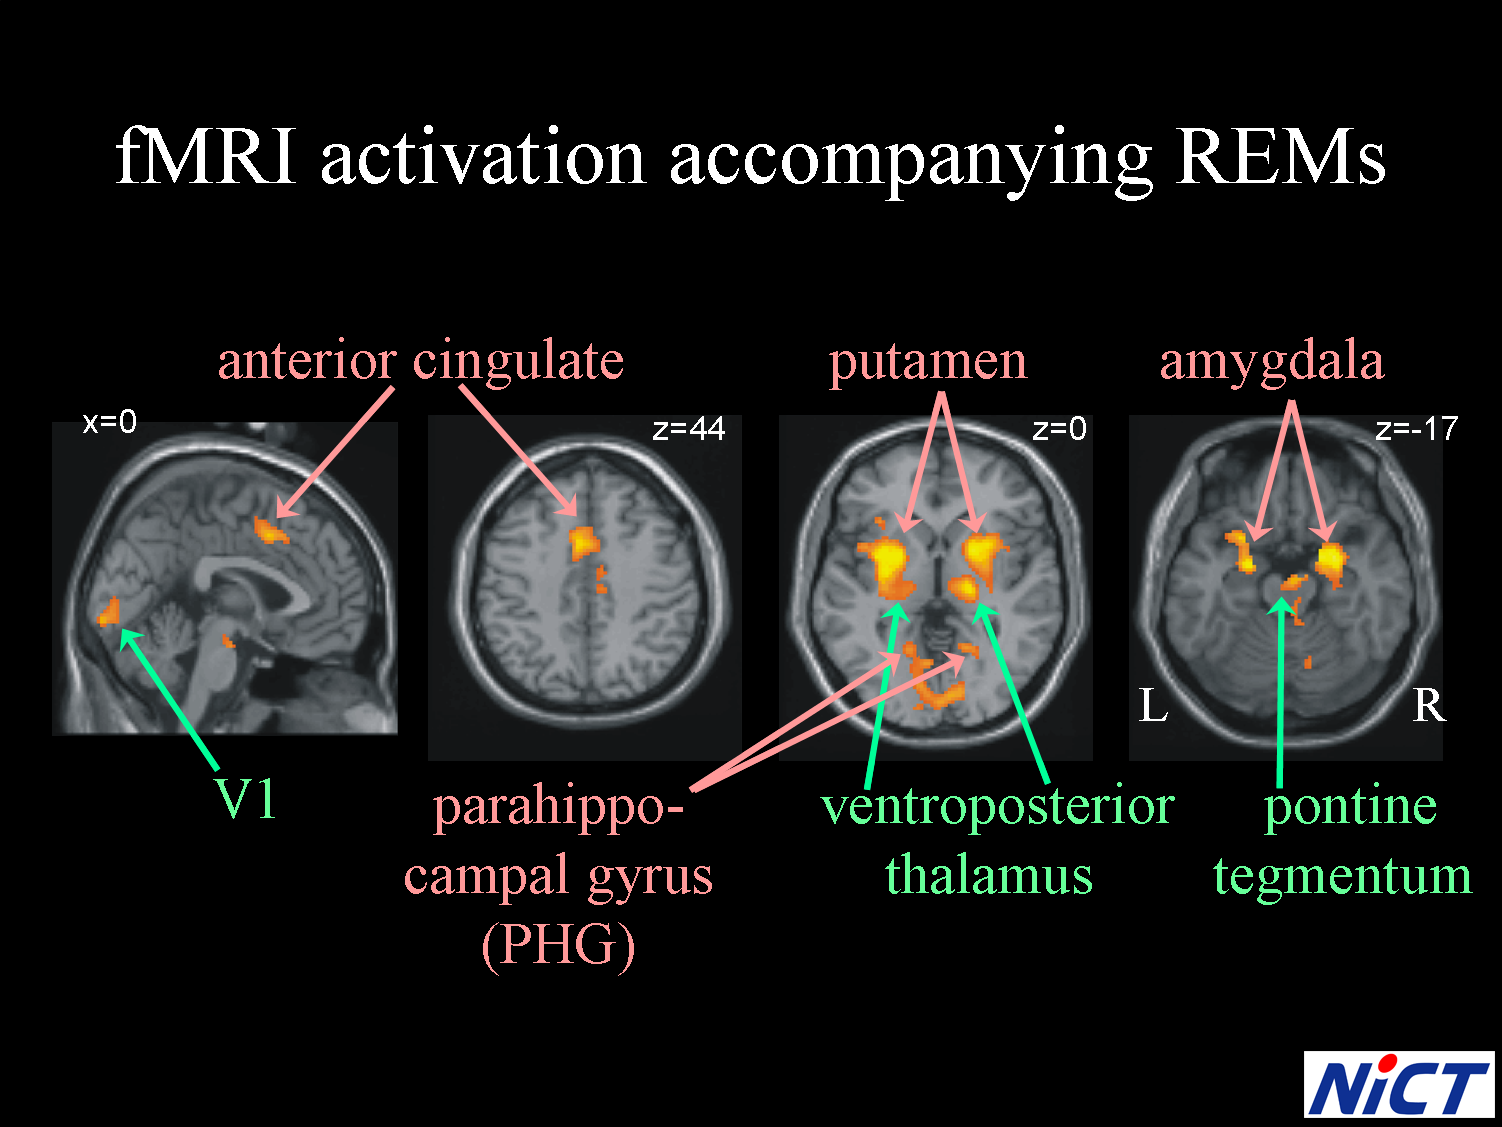 in rem sleep brain